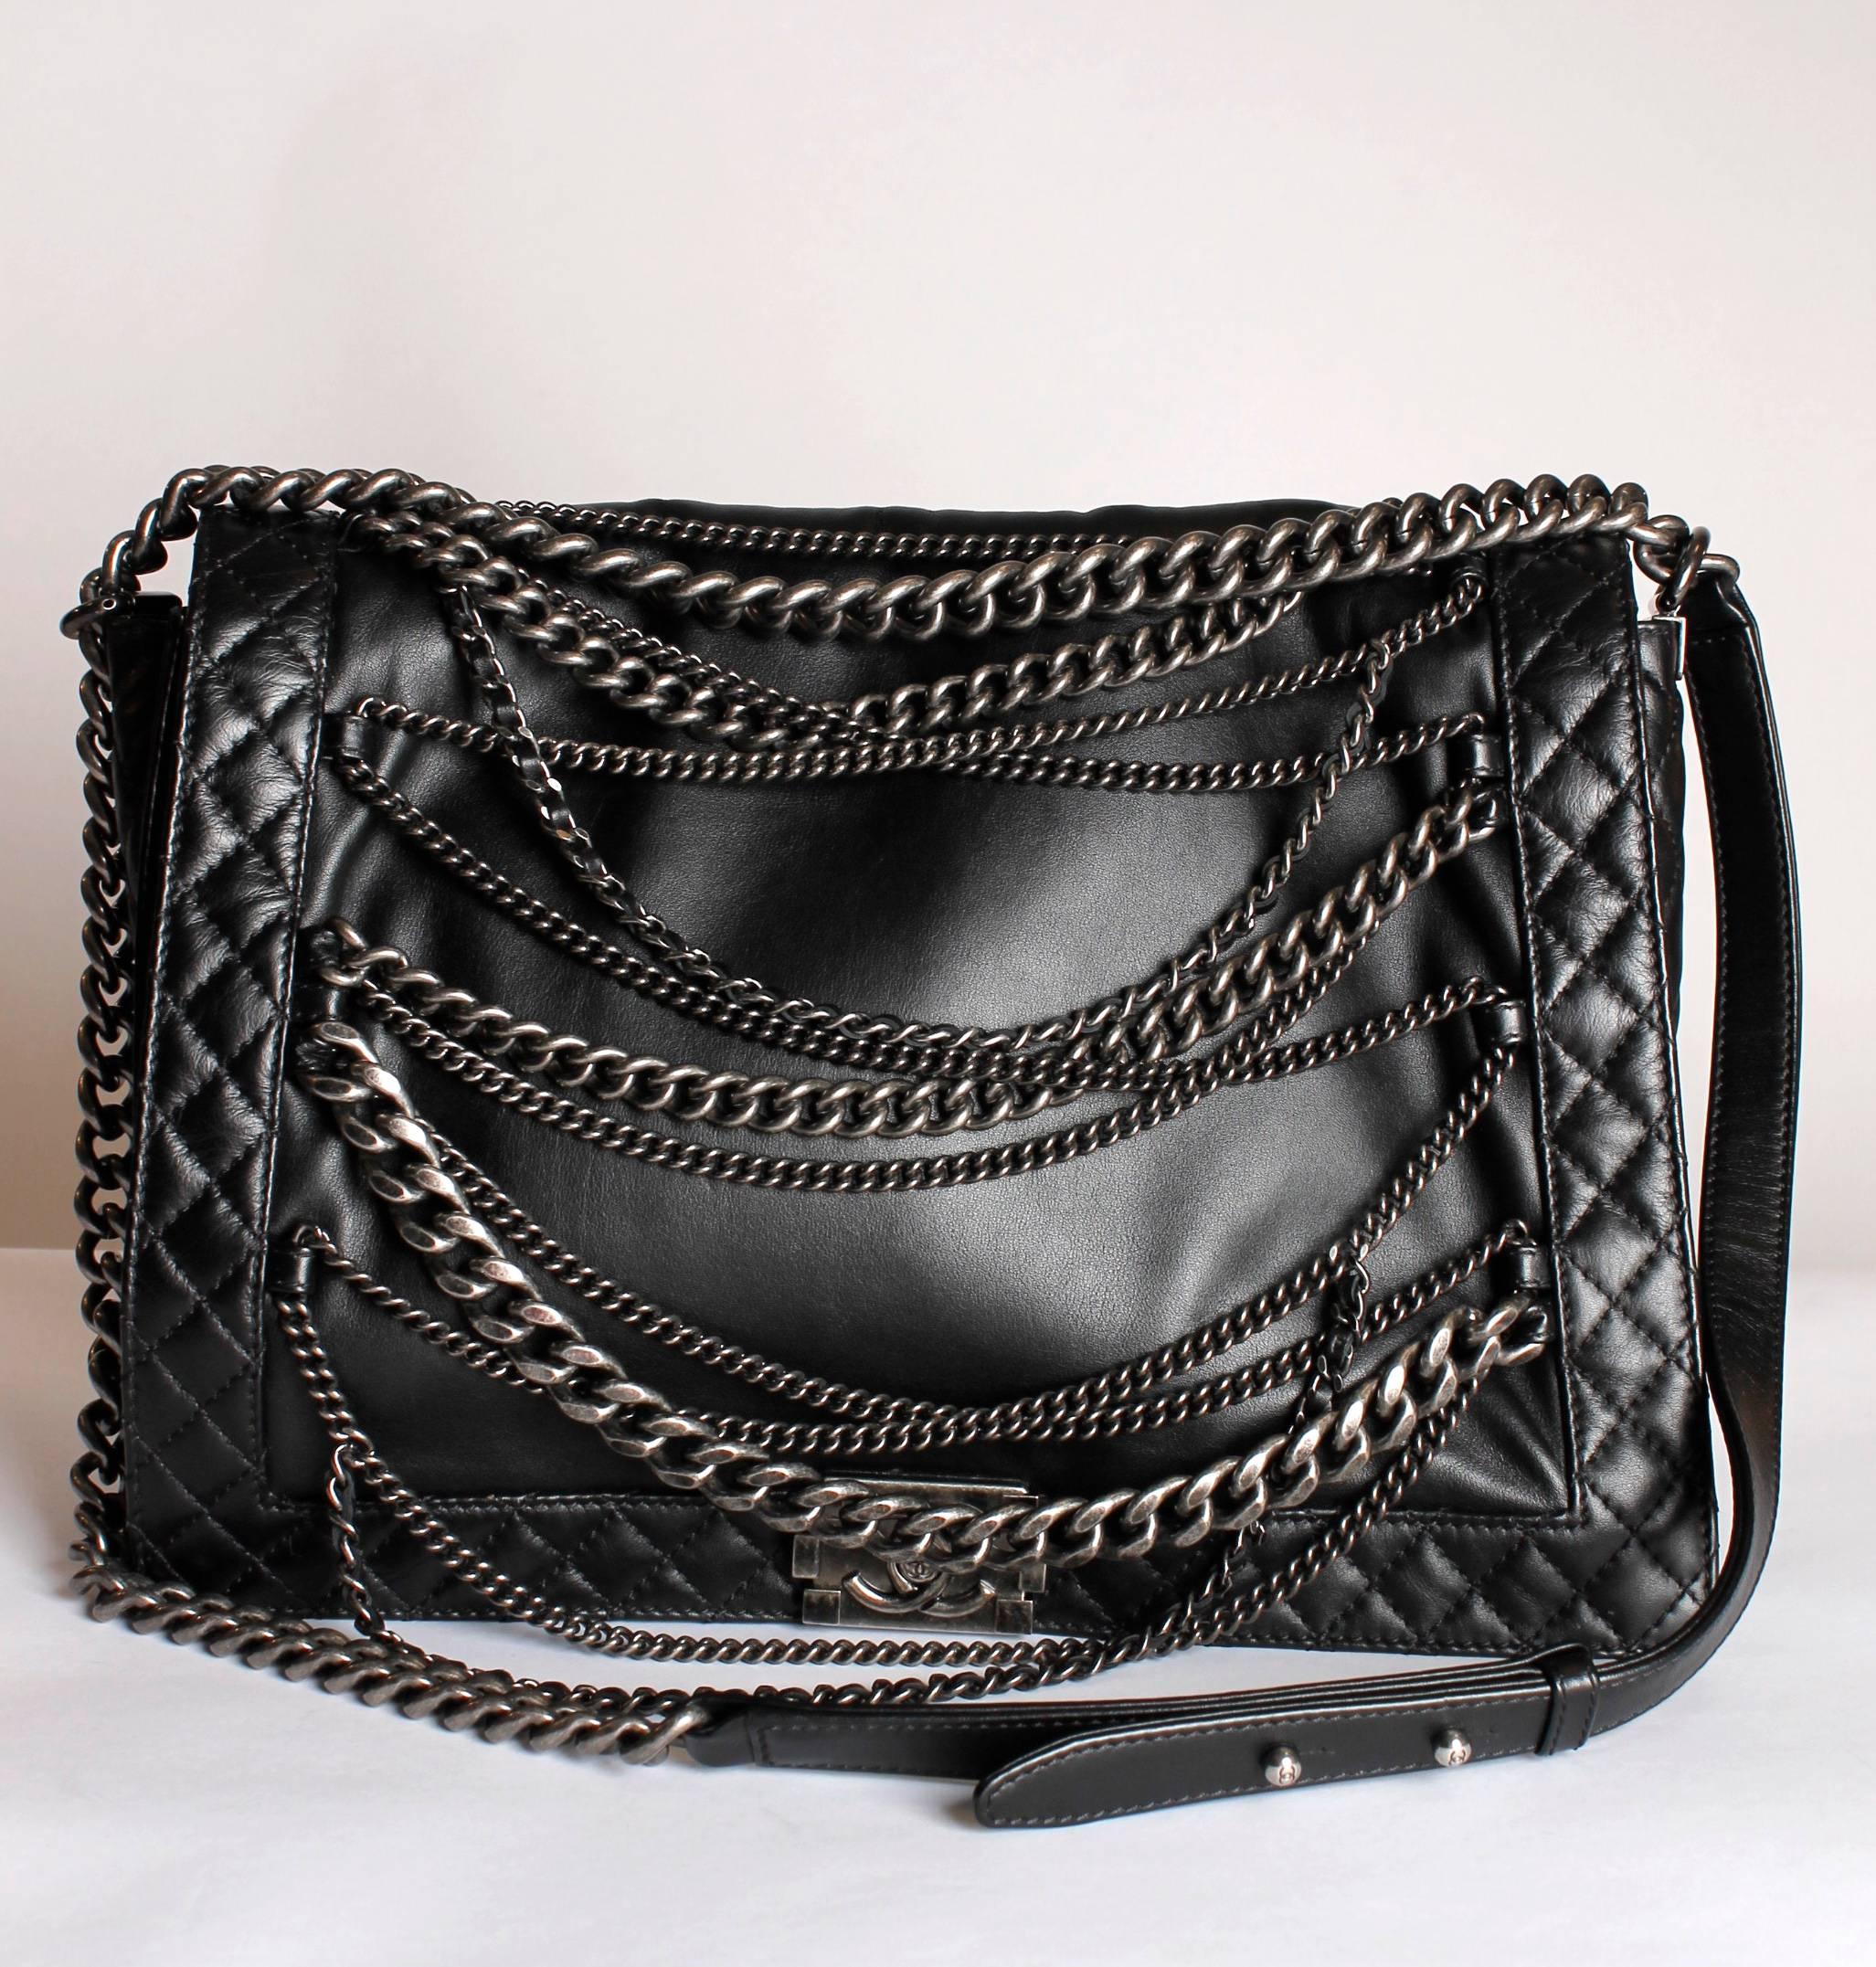 Chanel Boy Bag Enchained XL - black leather 2014 2